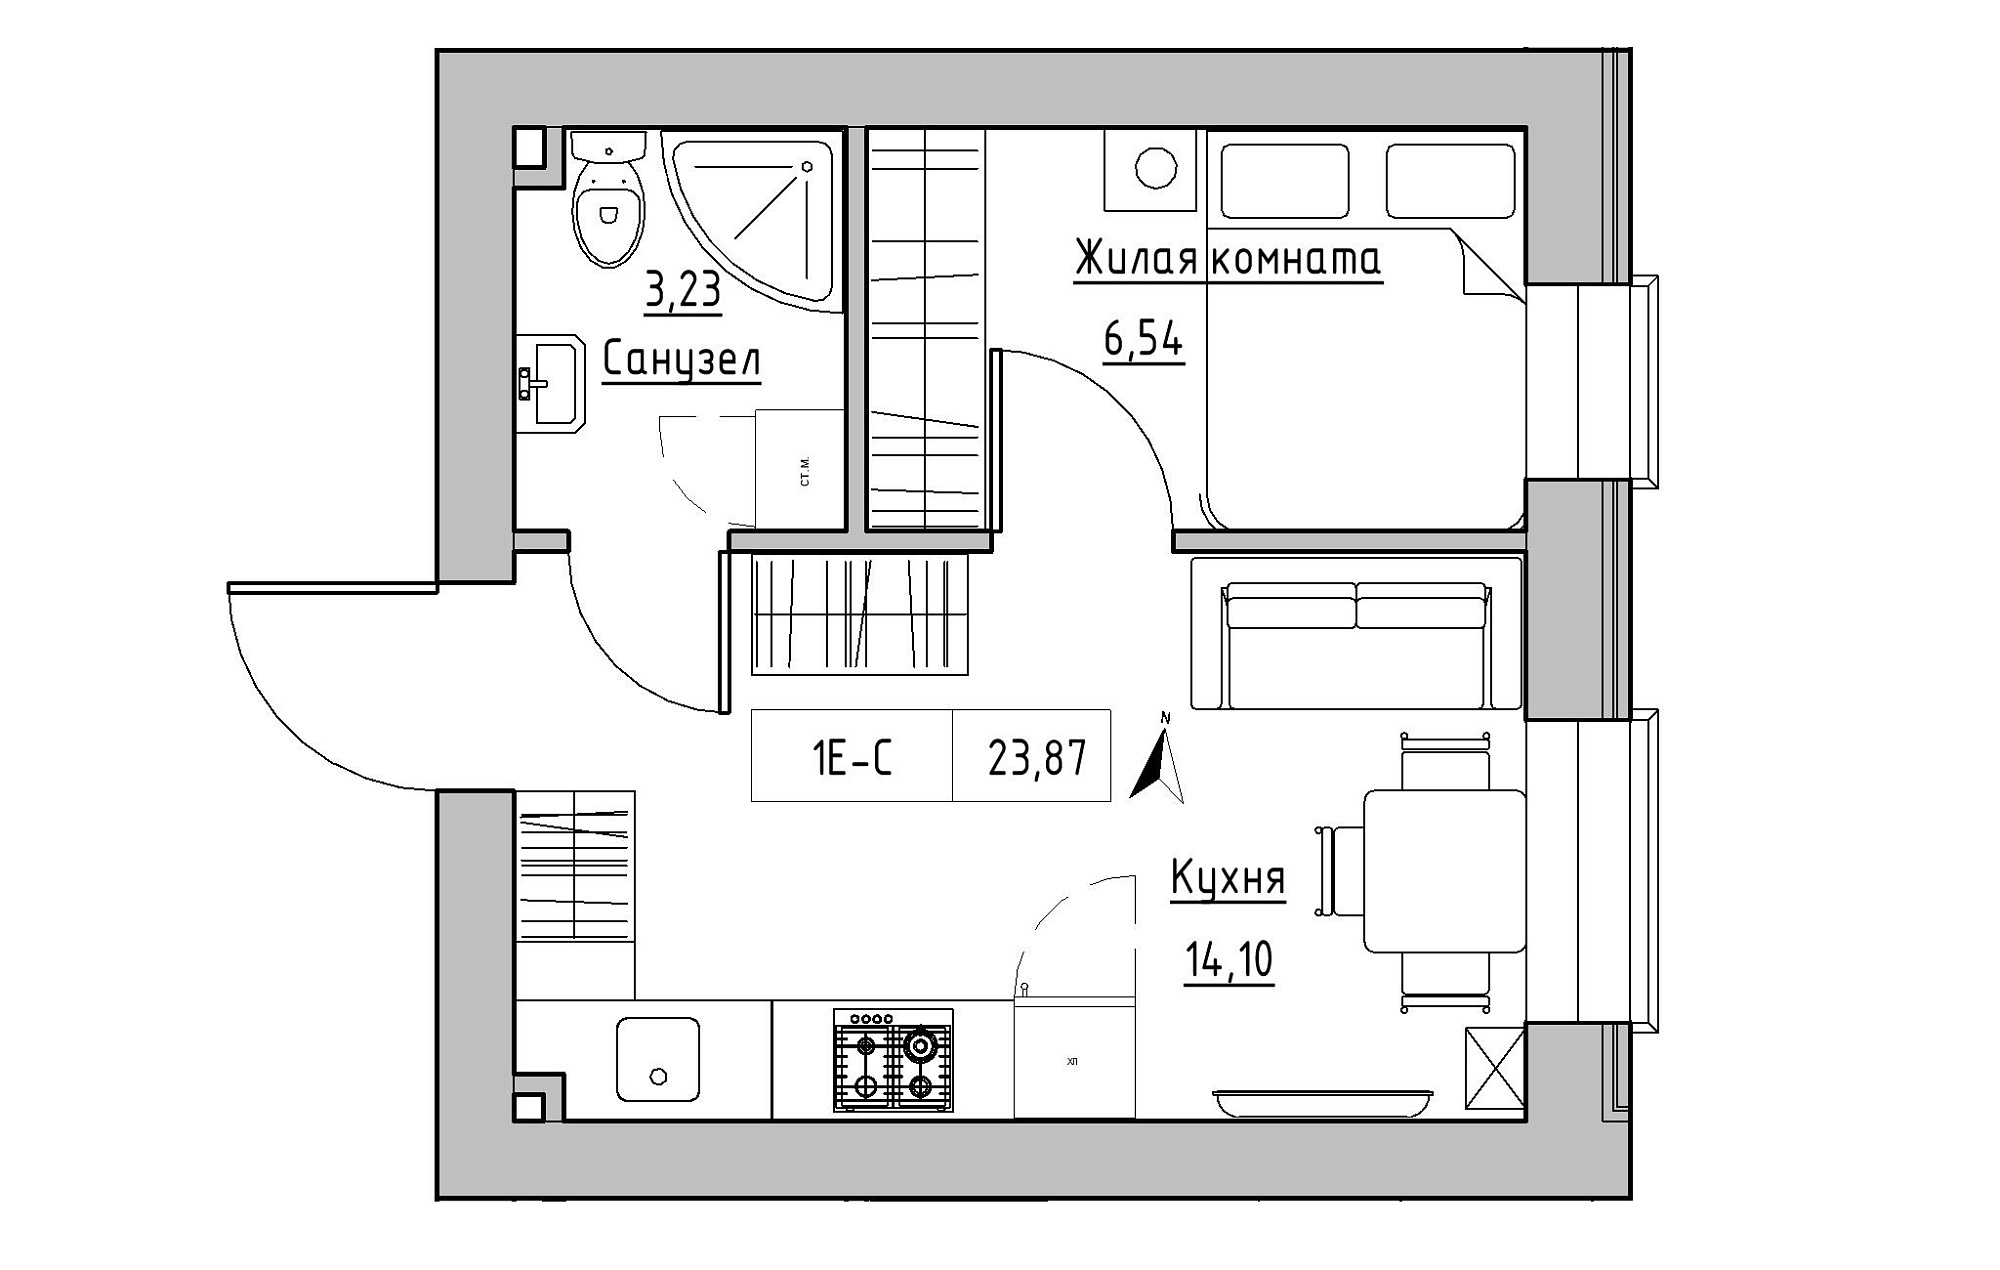 Planning 1-rm flats area 23.87m2, KS-019-03/0004.